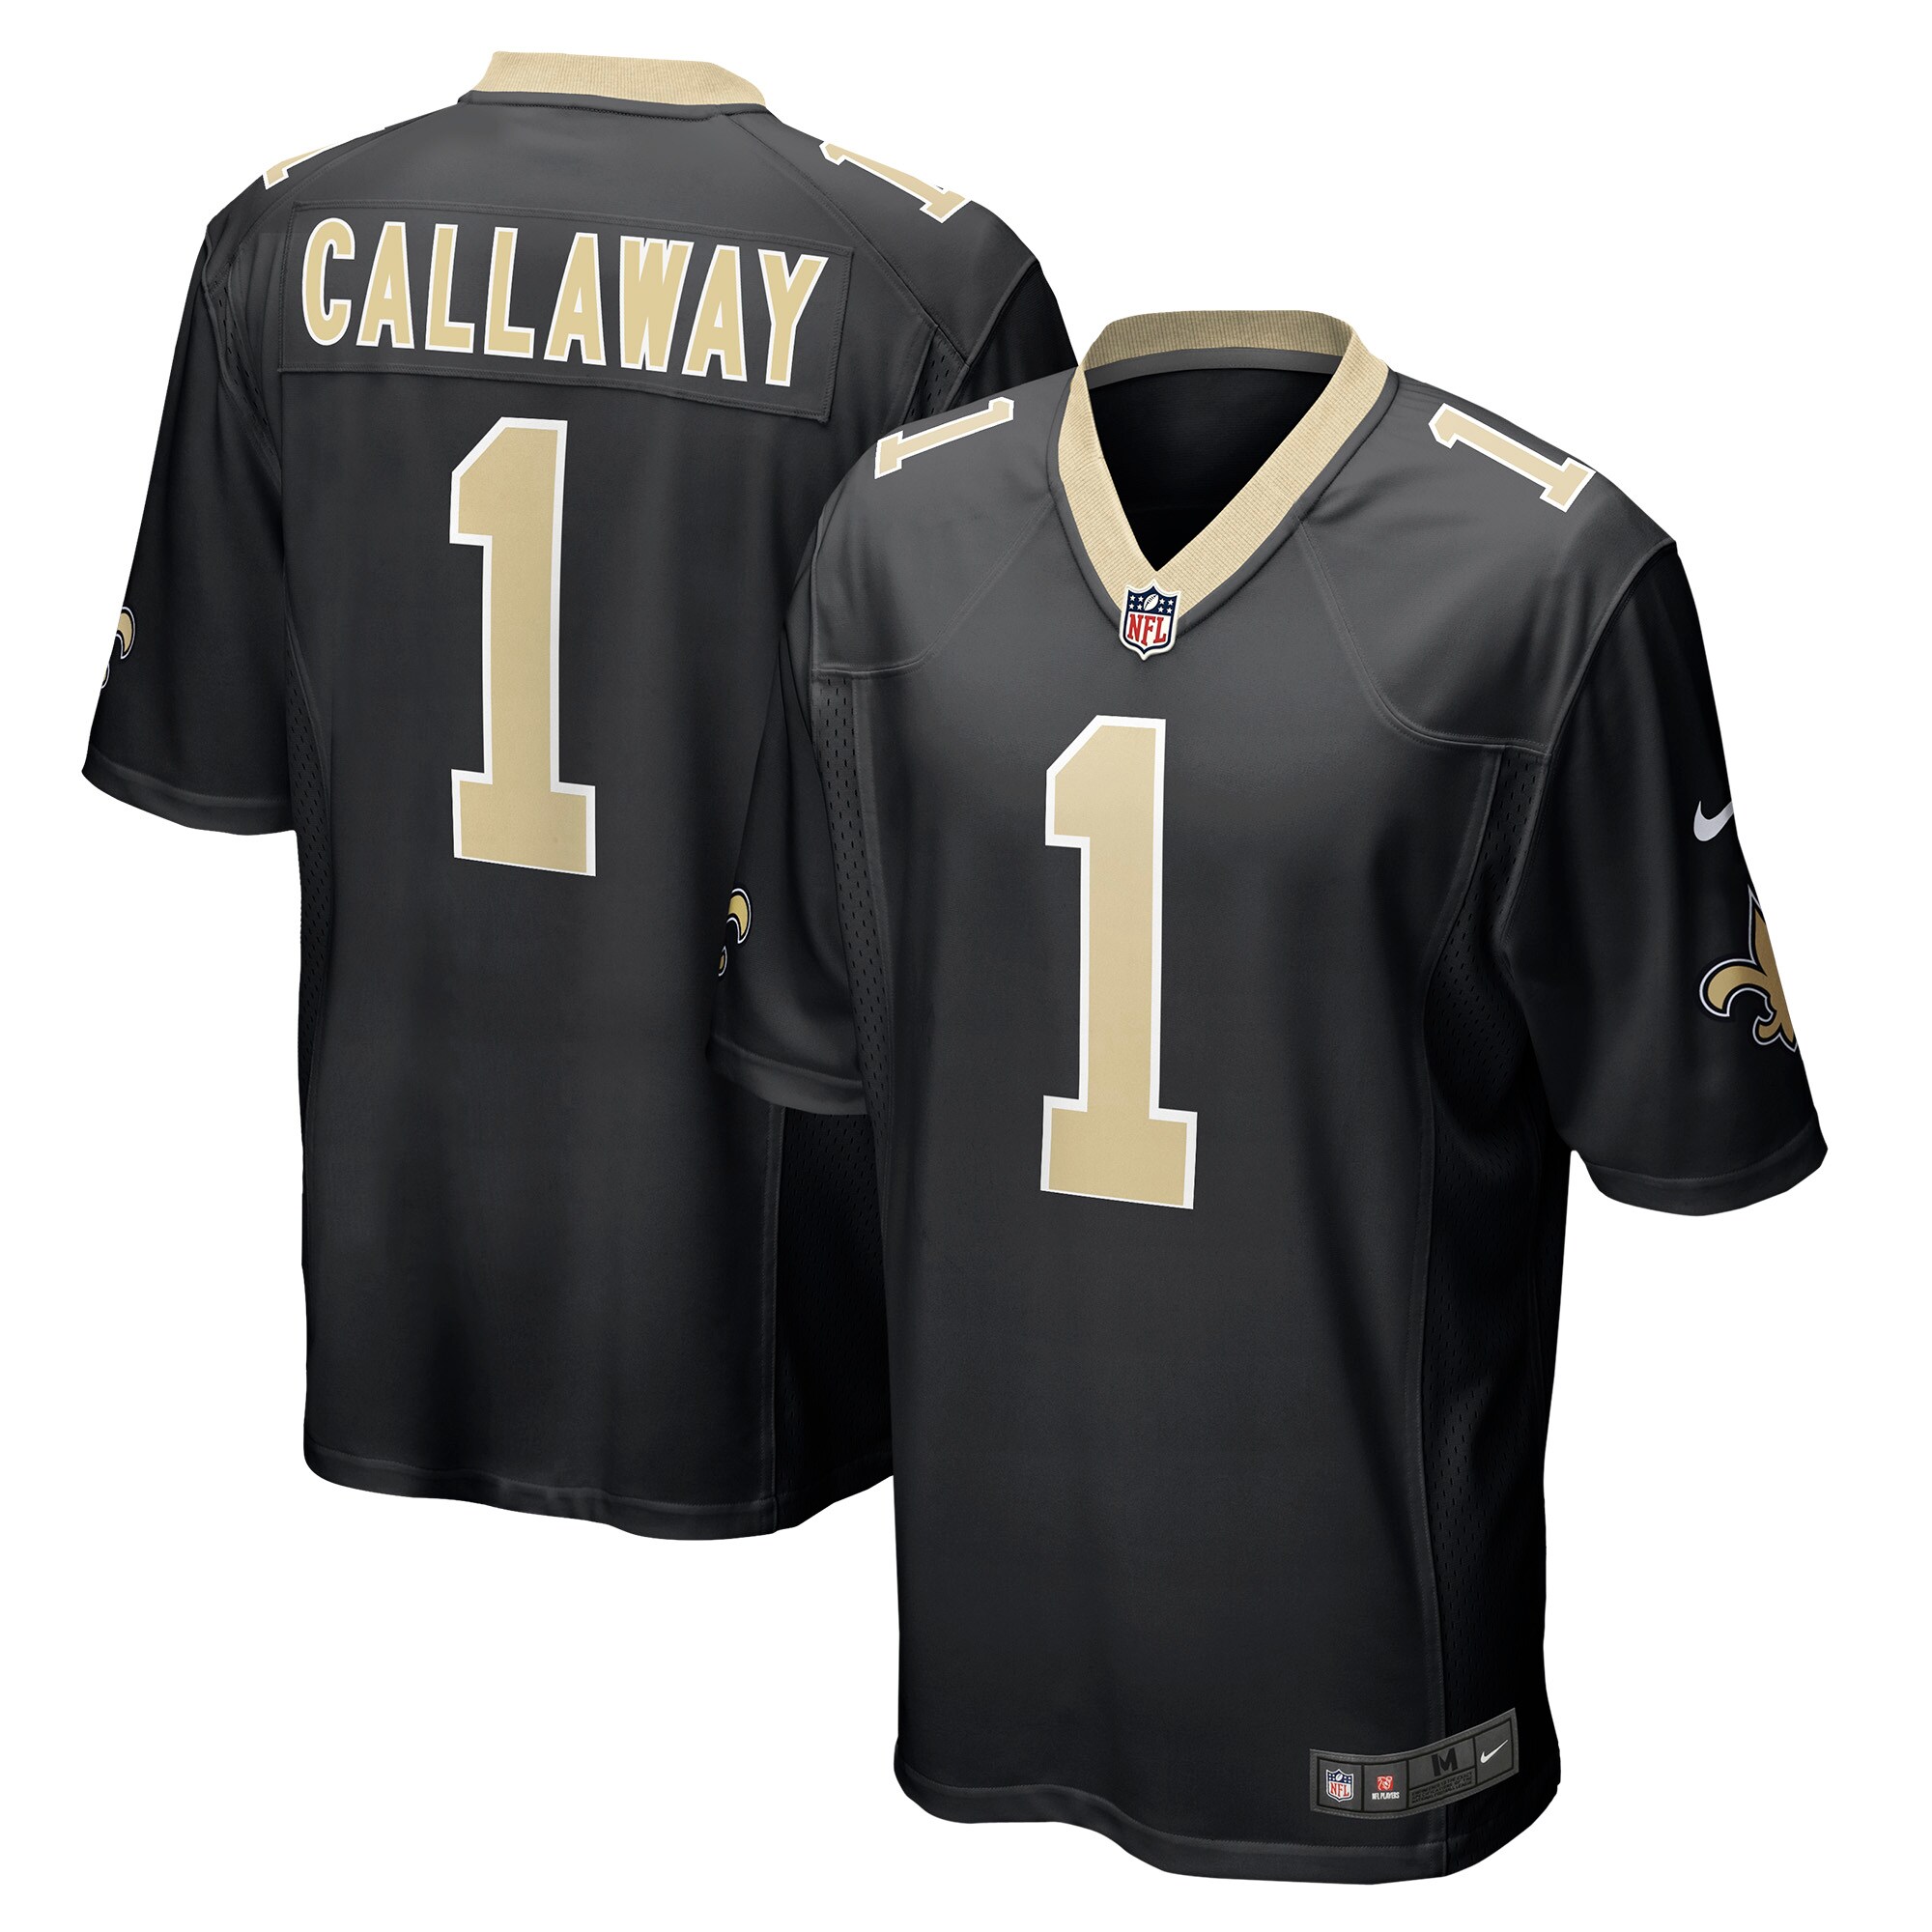 Men's New Orleans Saints Marquez Callaway Nike Black Game Jersey